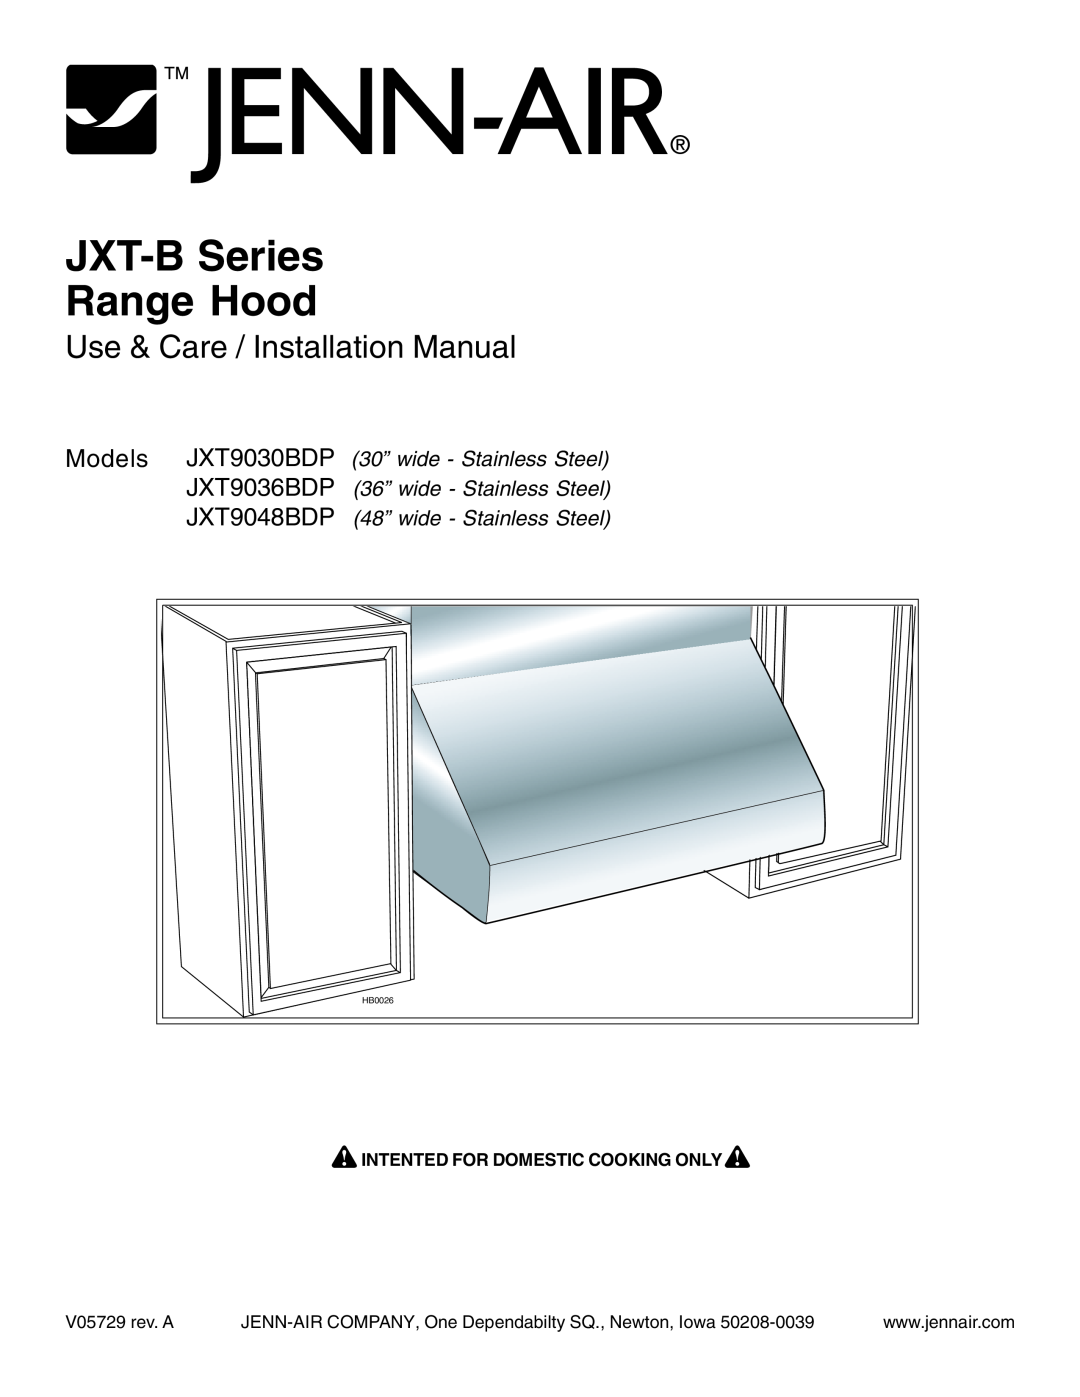 Jenn-Air JXT9036BDP installation manual JXT-B Series Range Hood, Use & Care / Installation Manual, V05729 rev. A, HB0026 